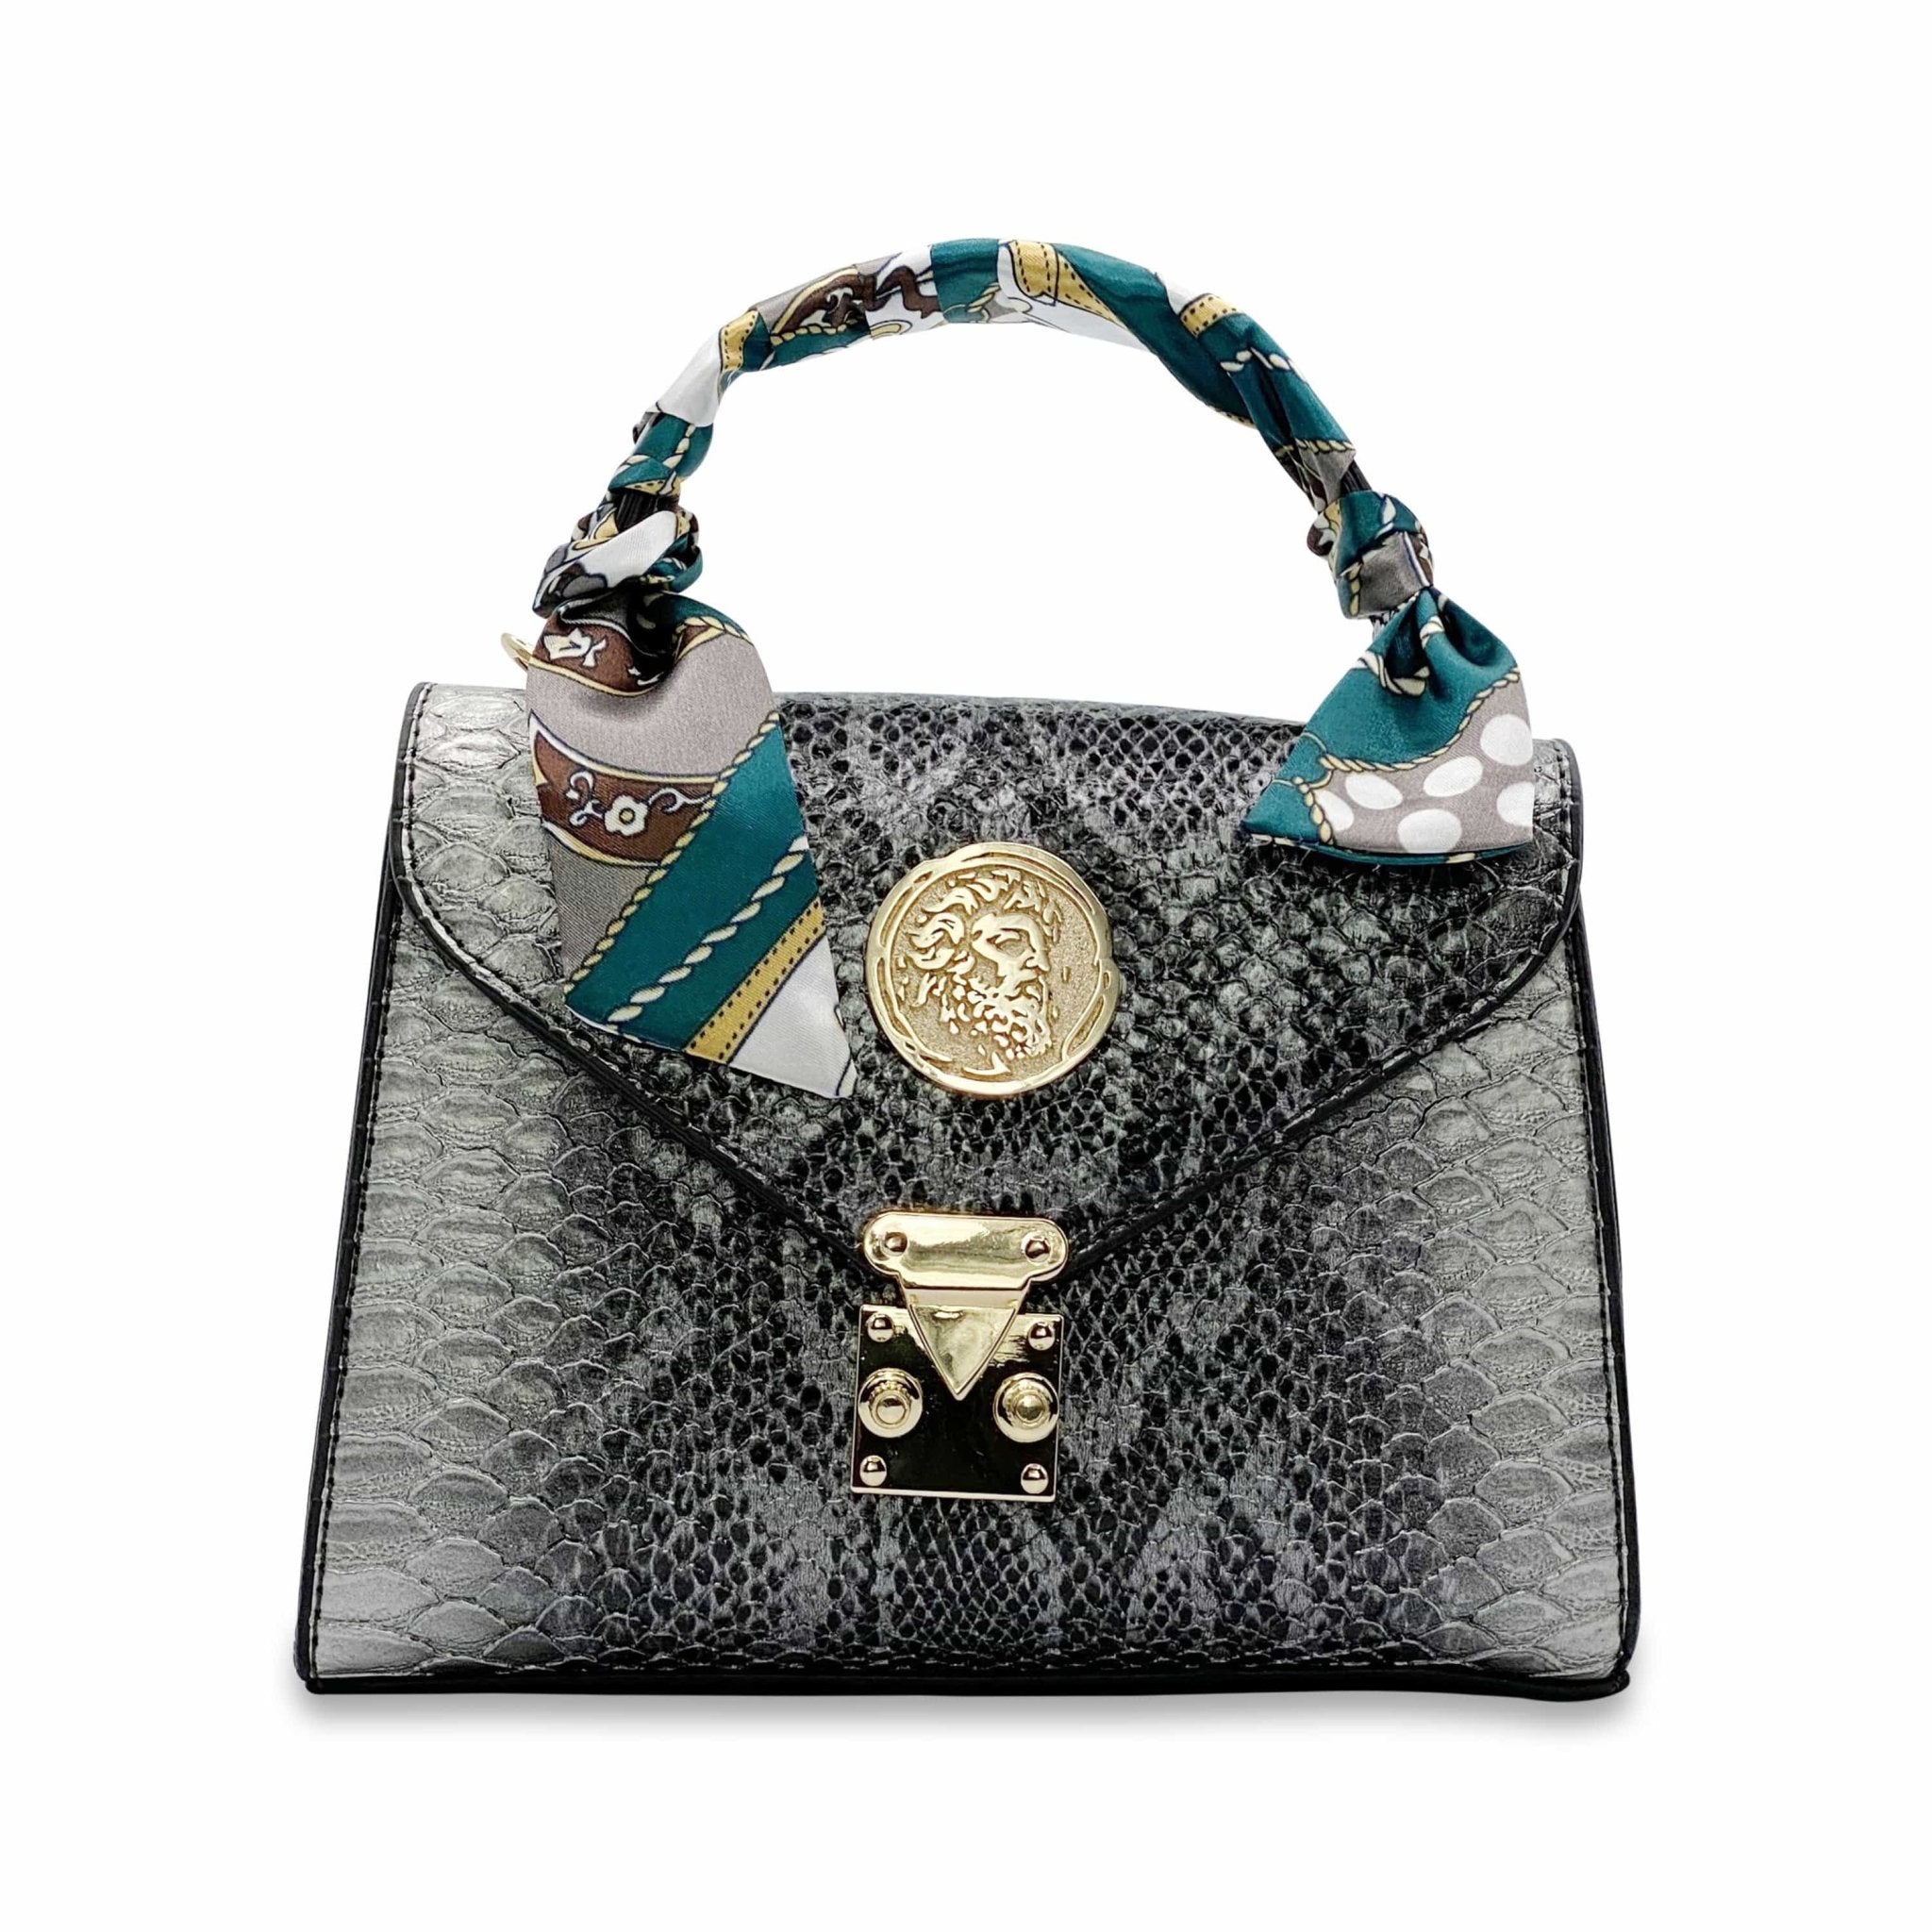 Adoni MMVII New York Brand New Python Embossed Mercury Nano Handbag 